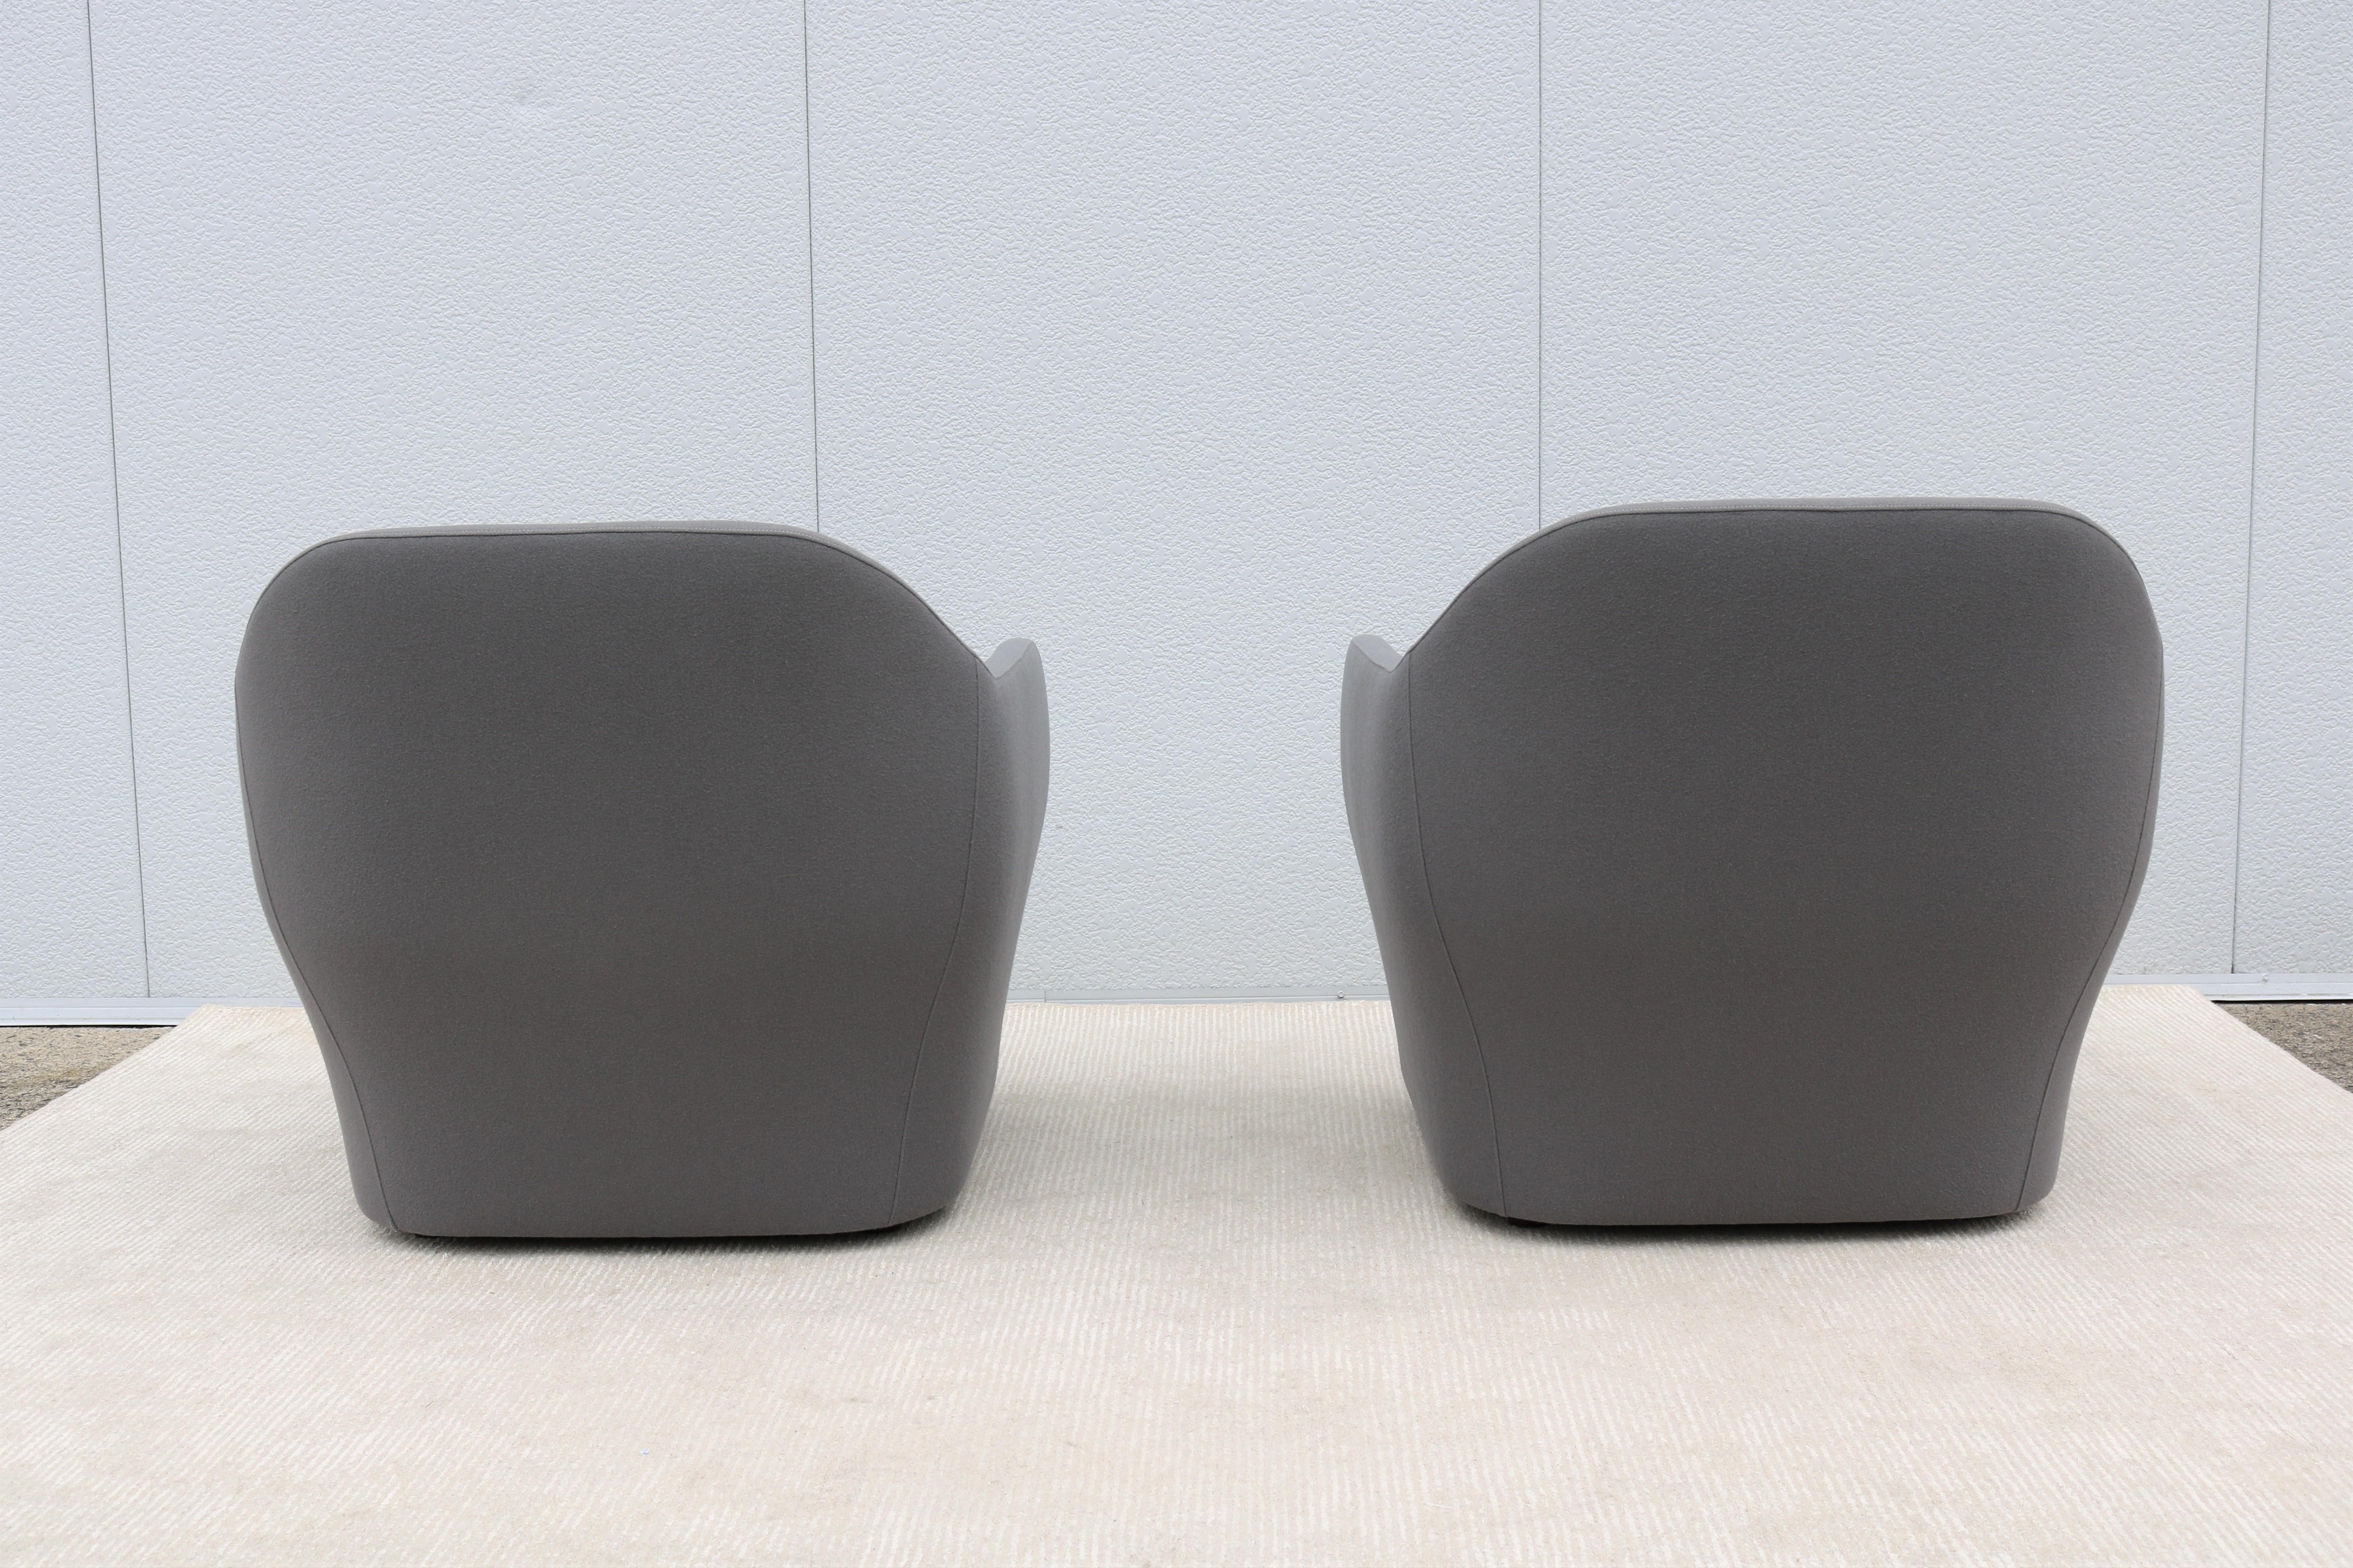 Wool Modern Jaime Hayon for Bernhardt Design Bardot Gray Lounge Chairs, a Pair